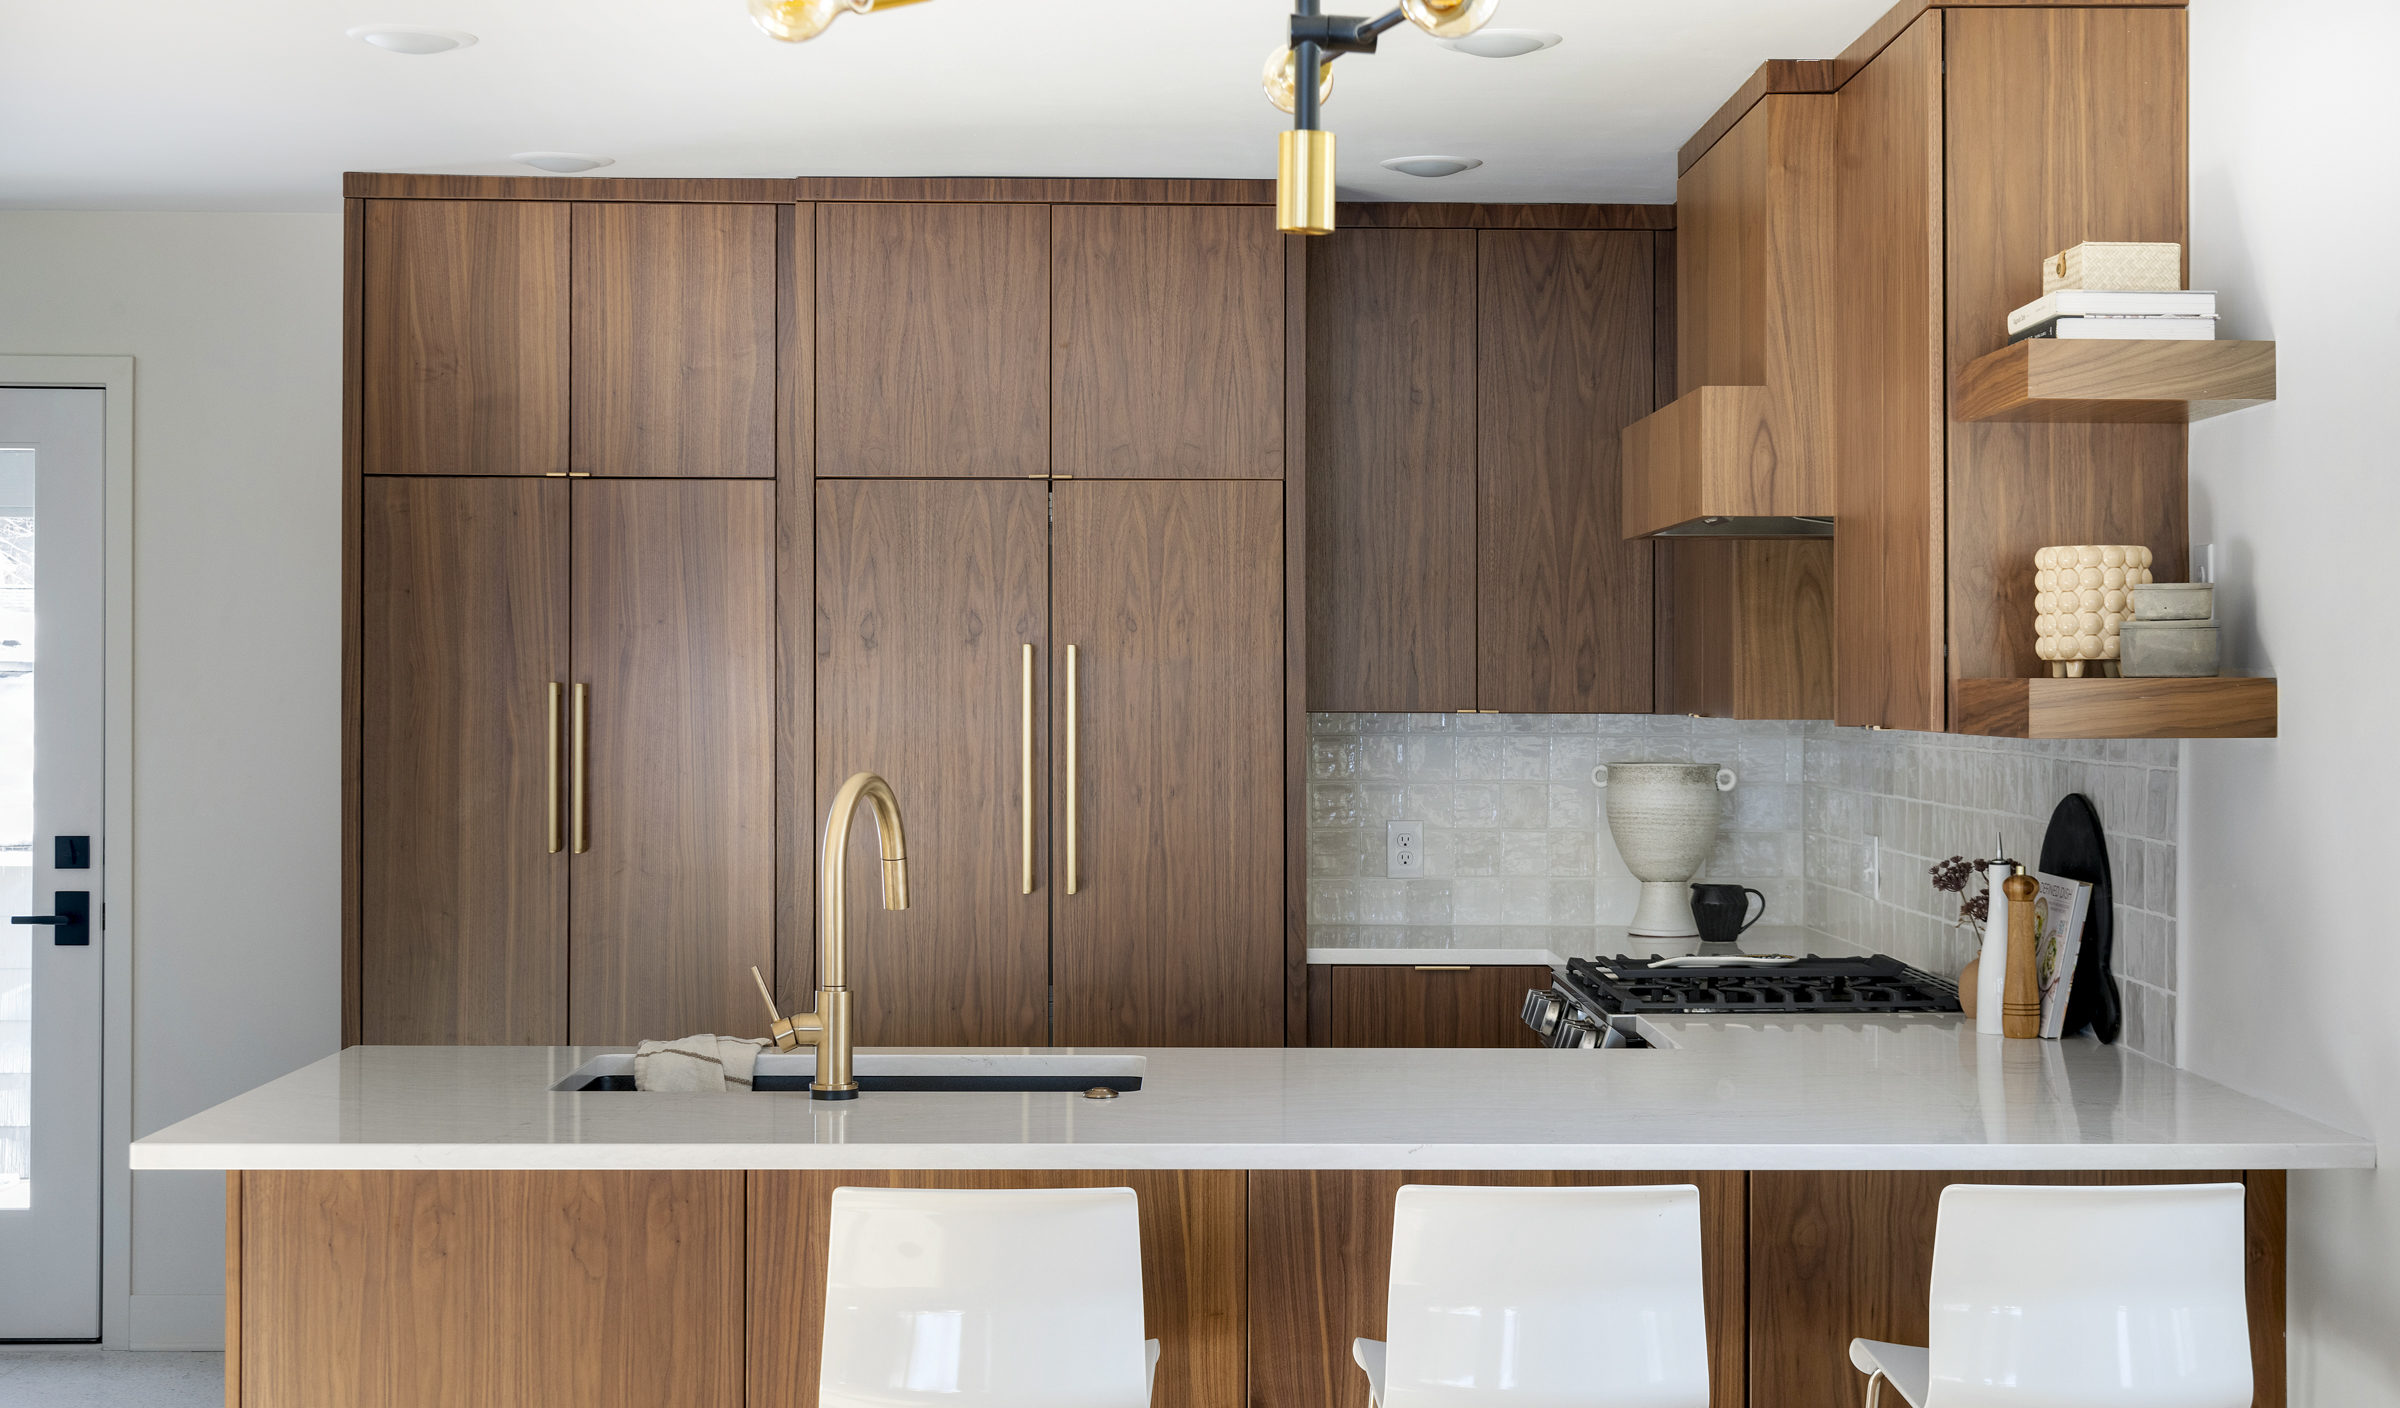 Wooden kitchen cabinet idea | construction2style